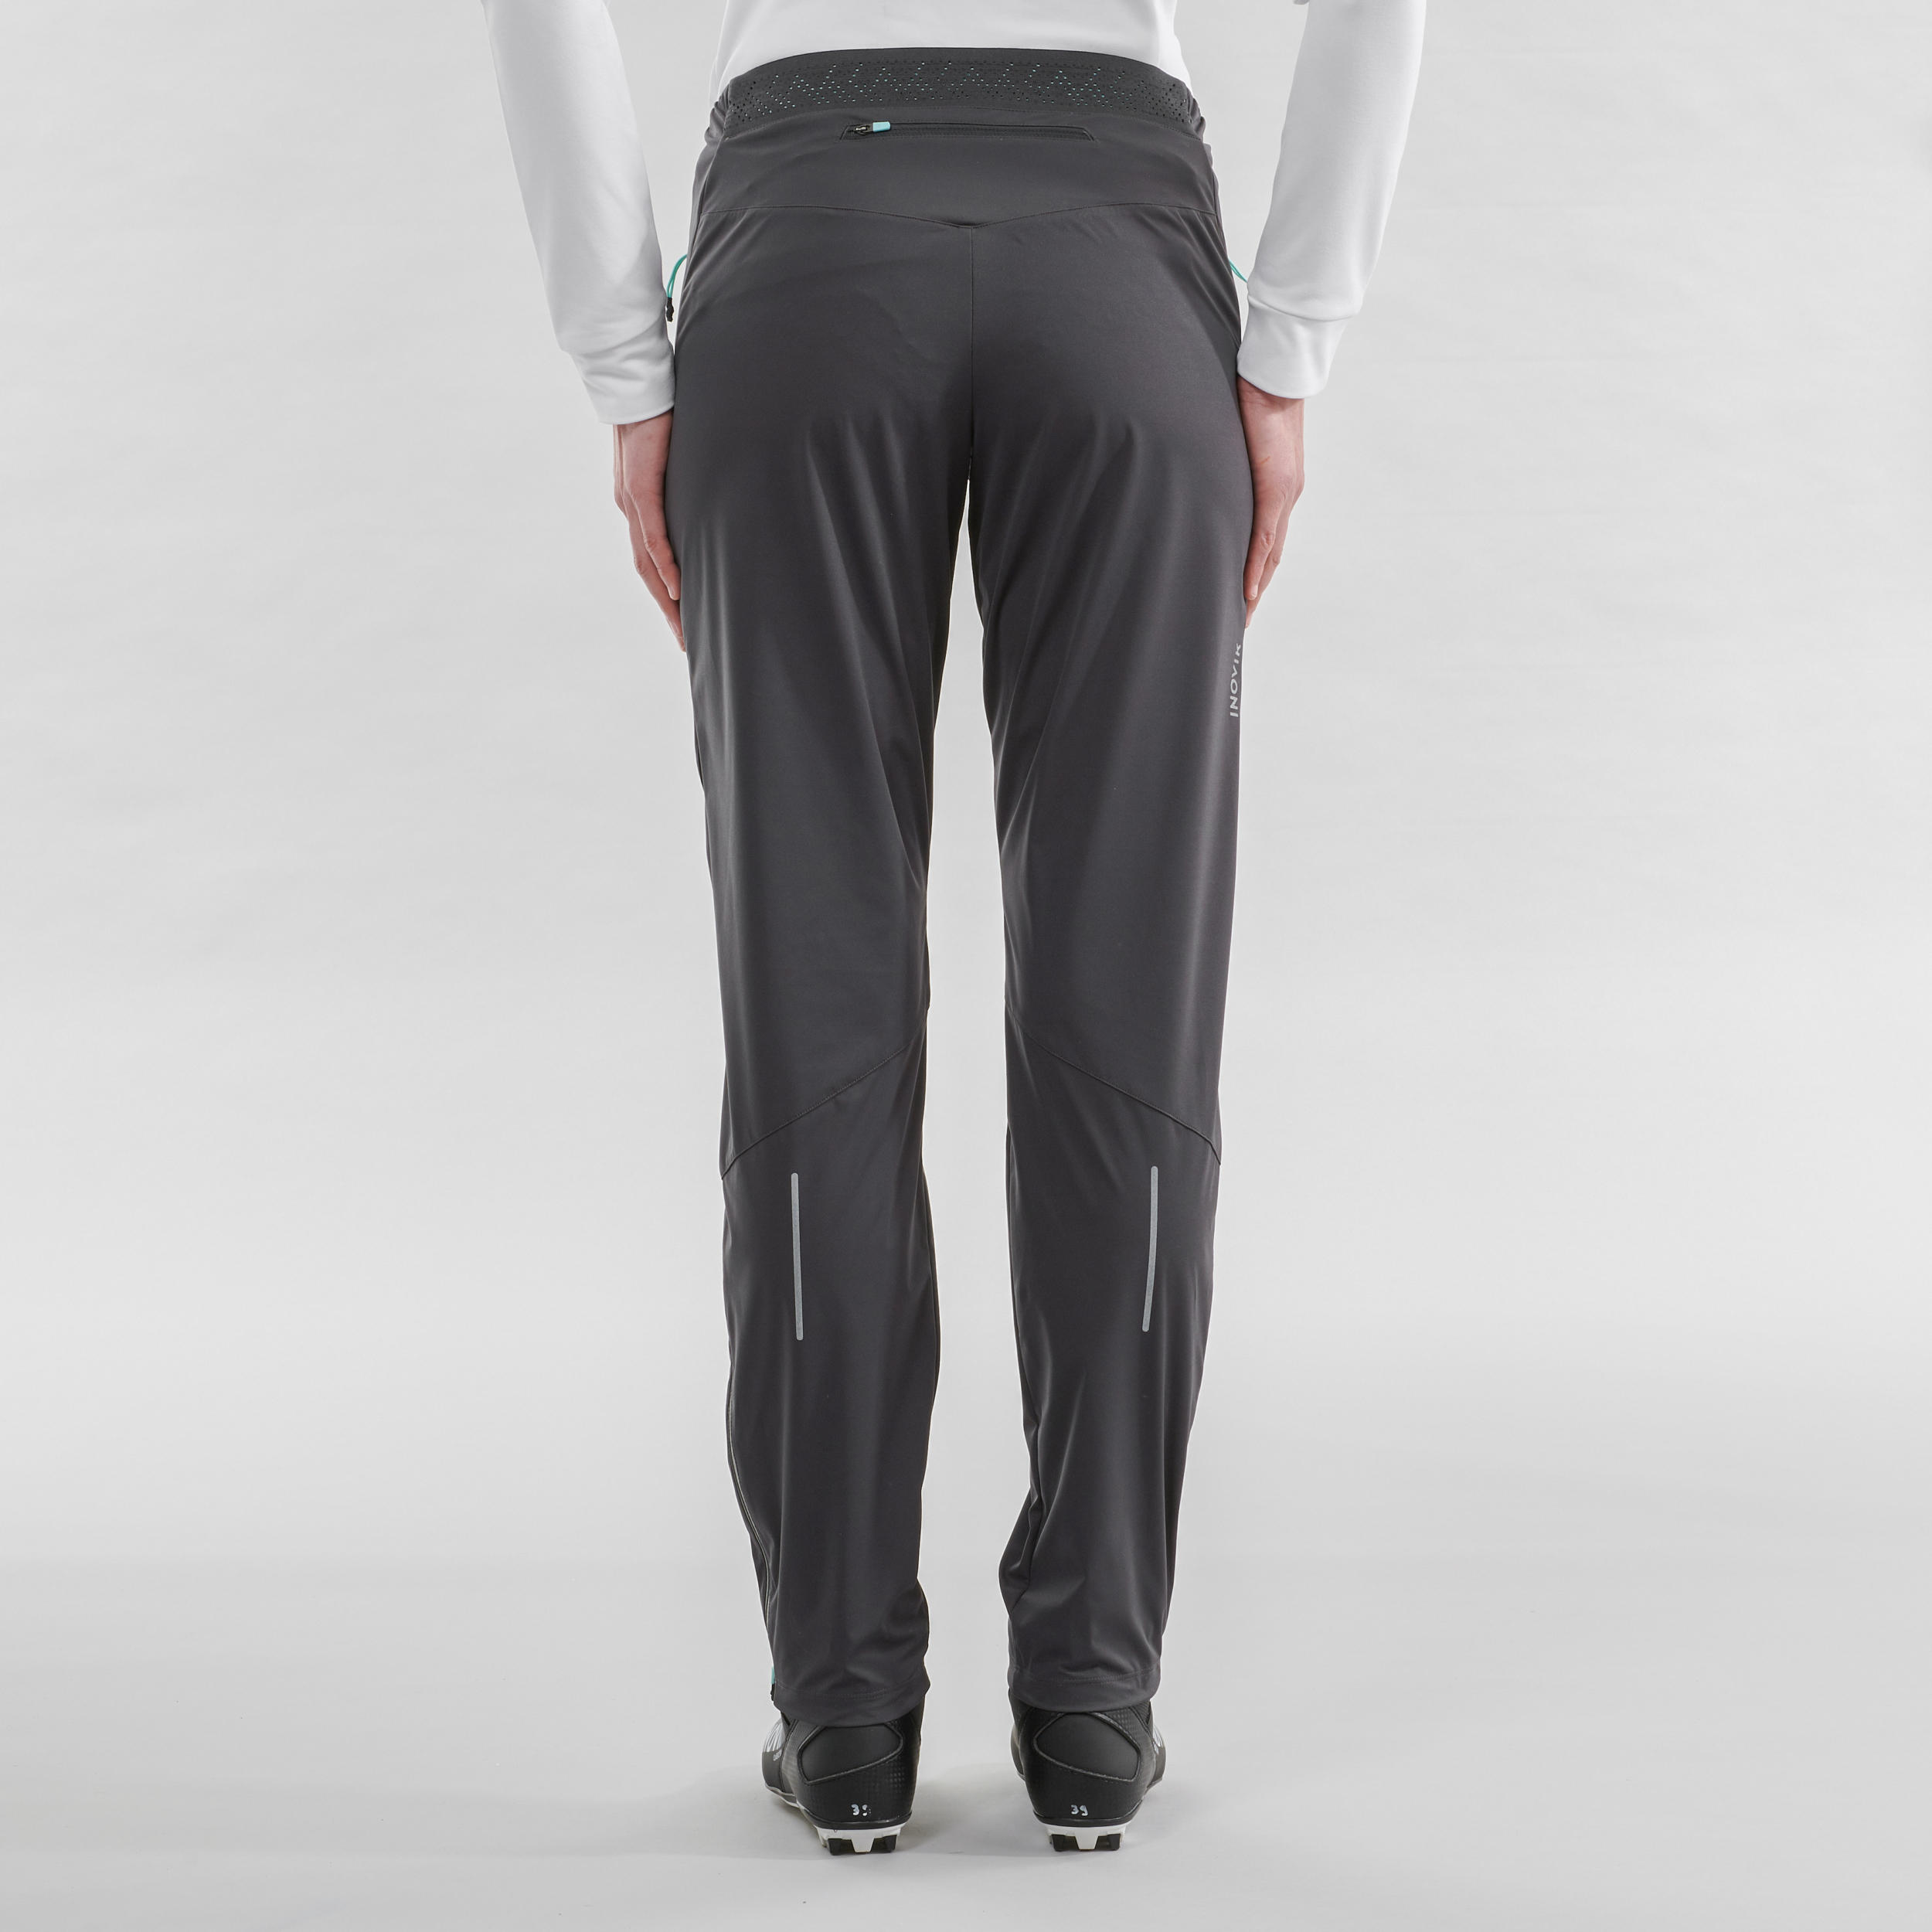 Women's Cross-Country Ski Trousers XC S Pant 500 - Grey 3/7